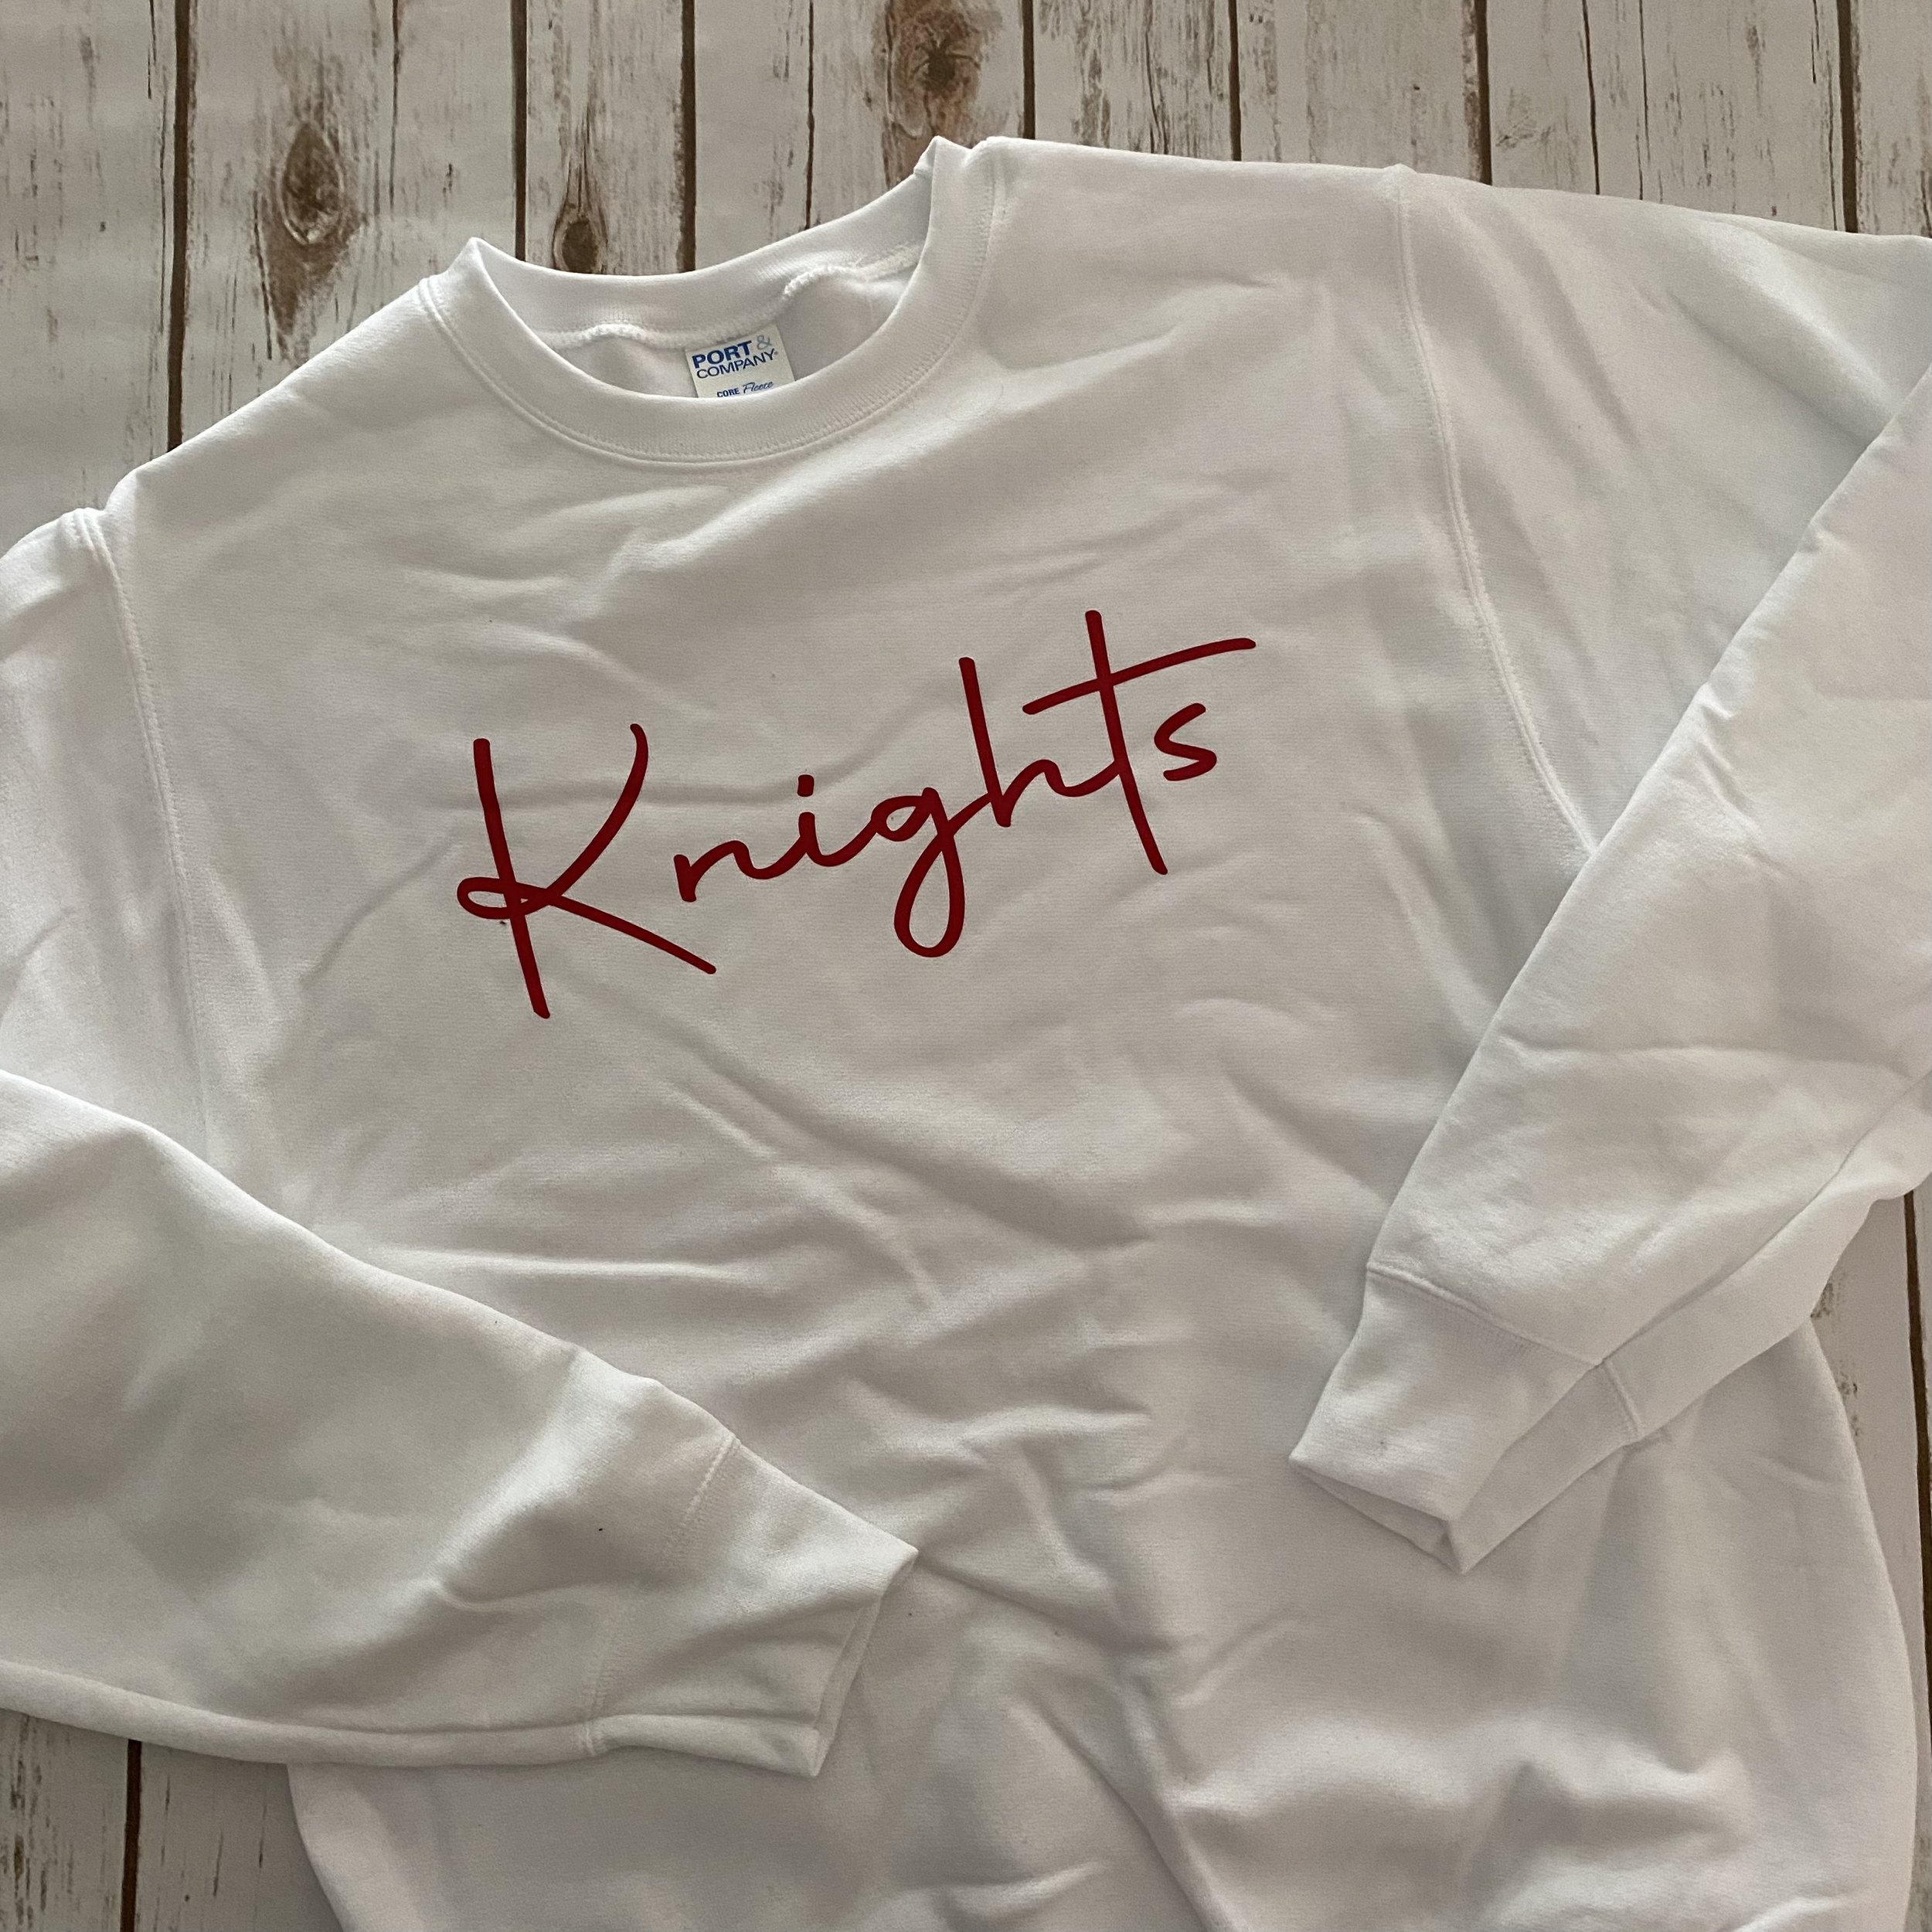 Kings Knights Nike Crewneck Sweatshirt